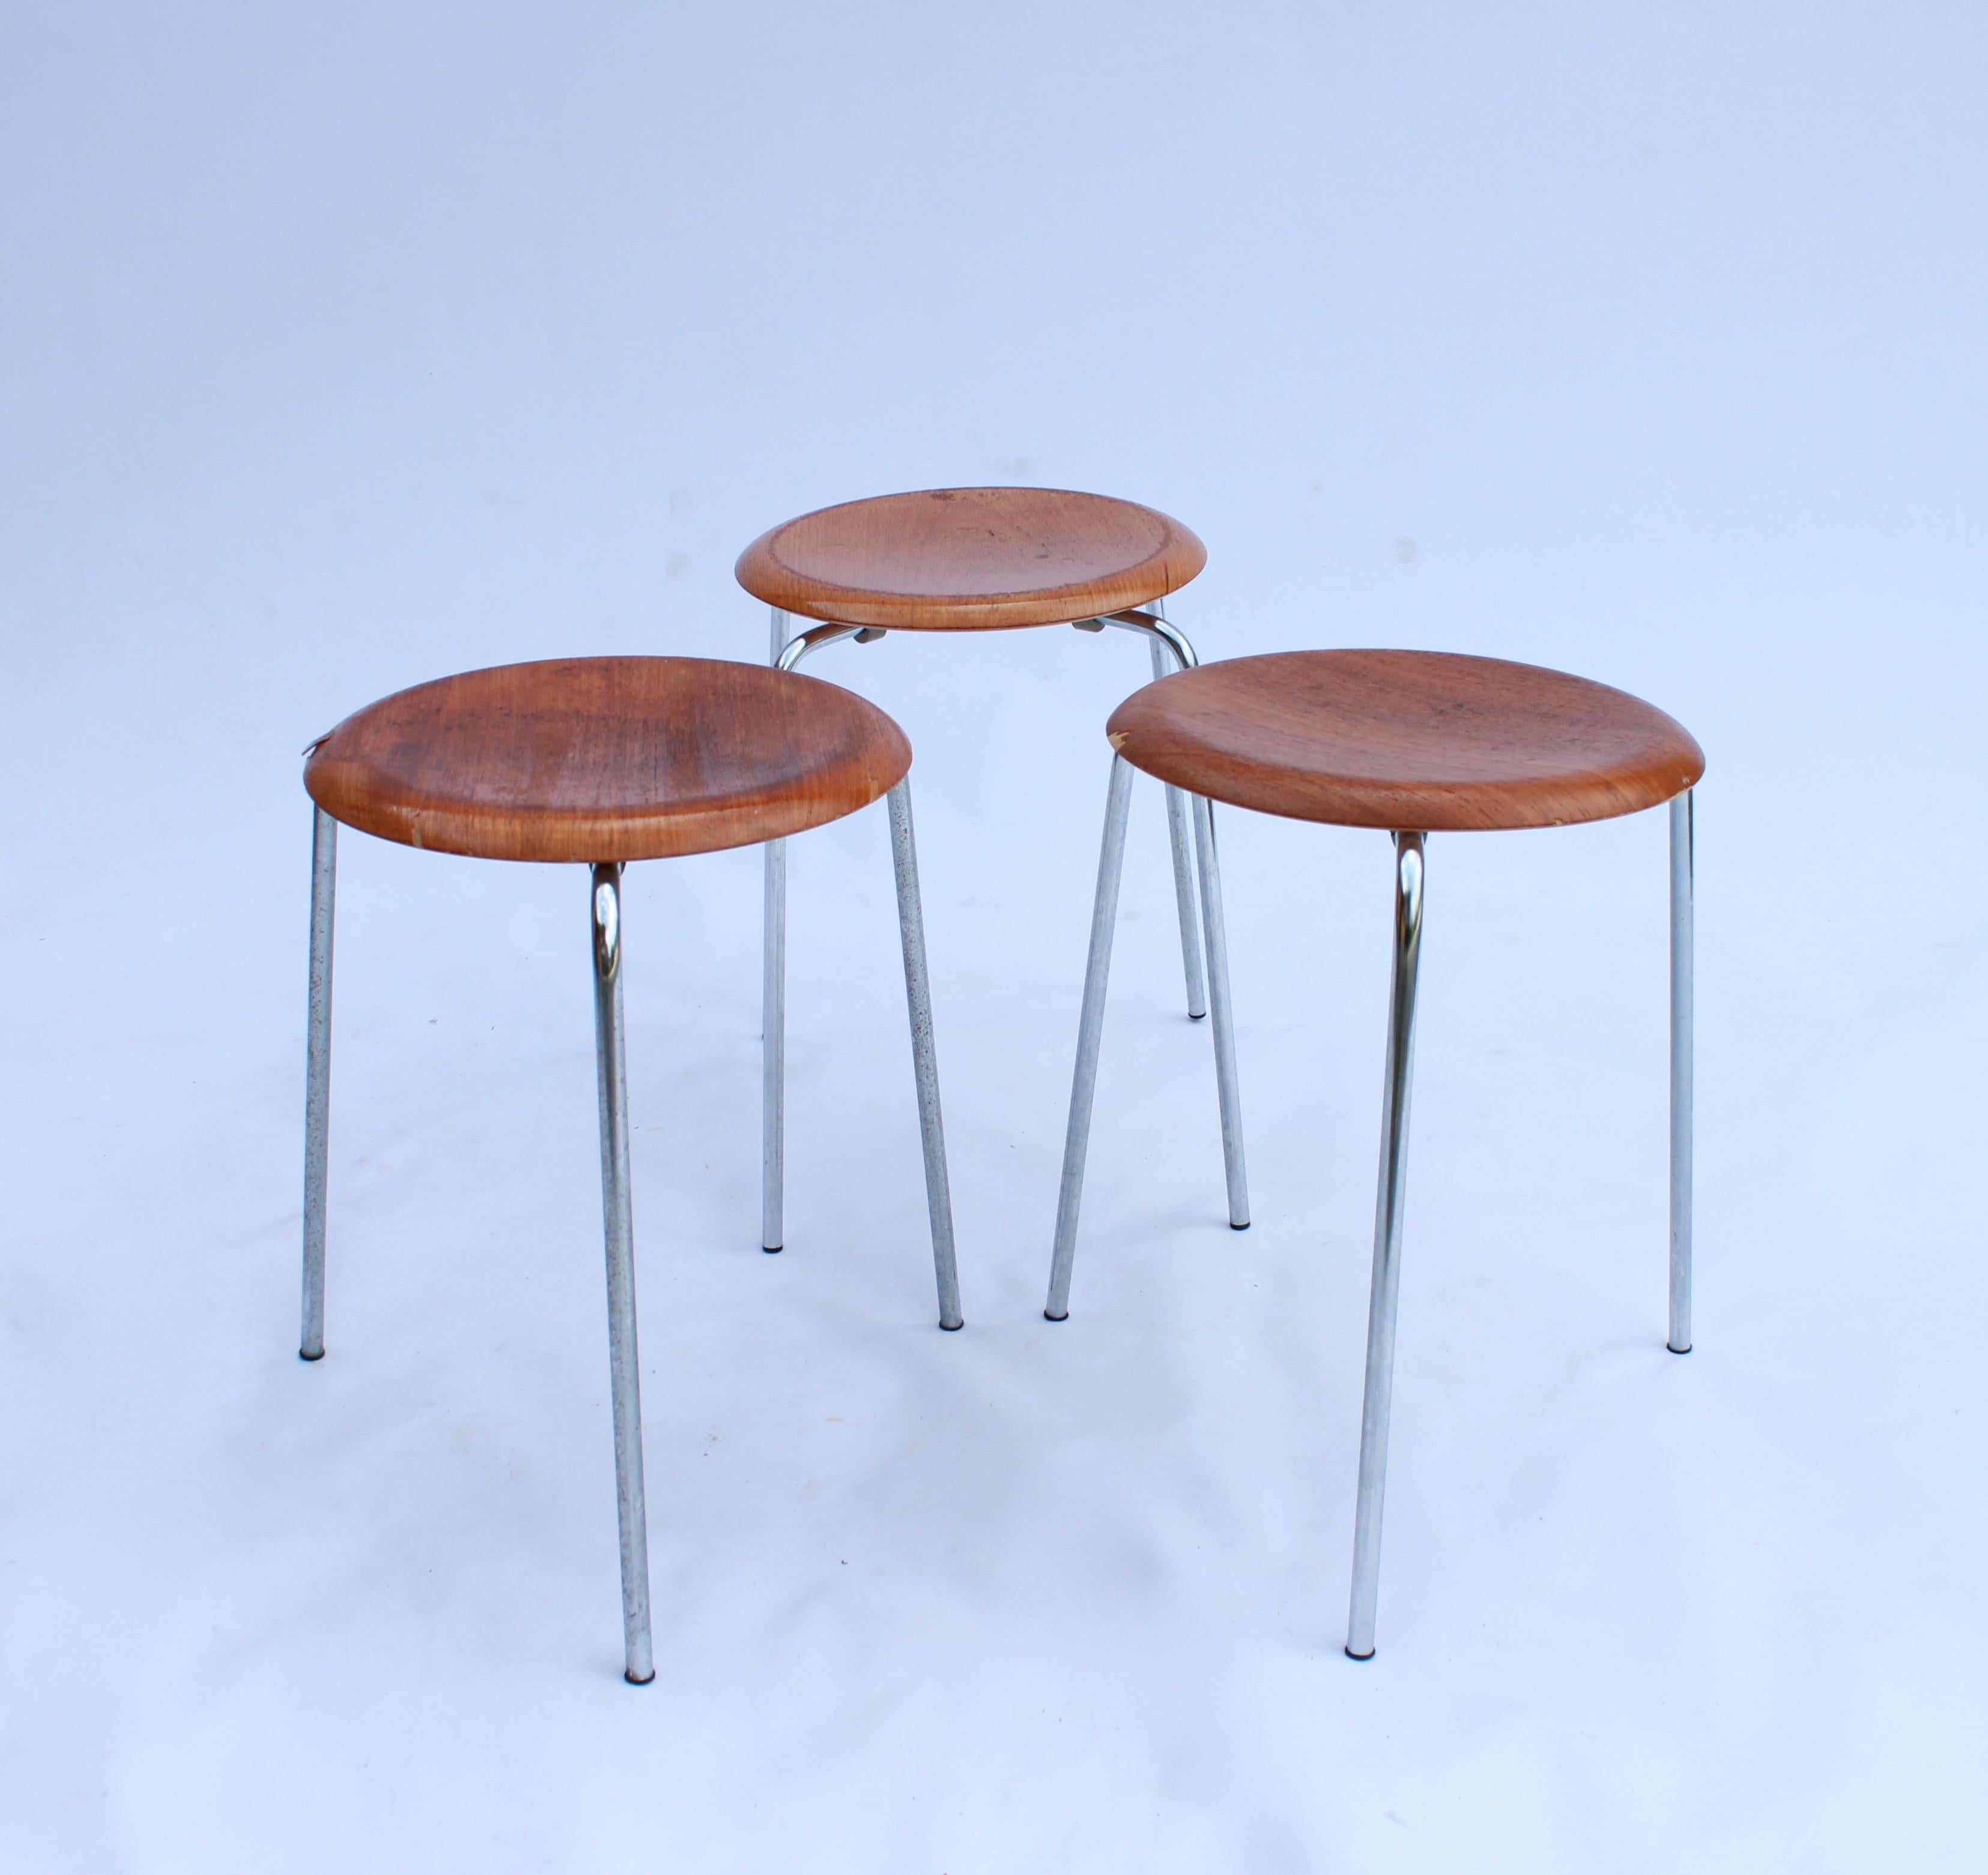 Arne Jacobsen 3170 - 3 For Sale on 1stDibs